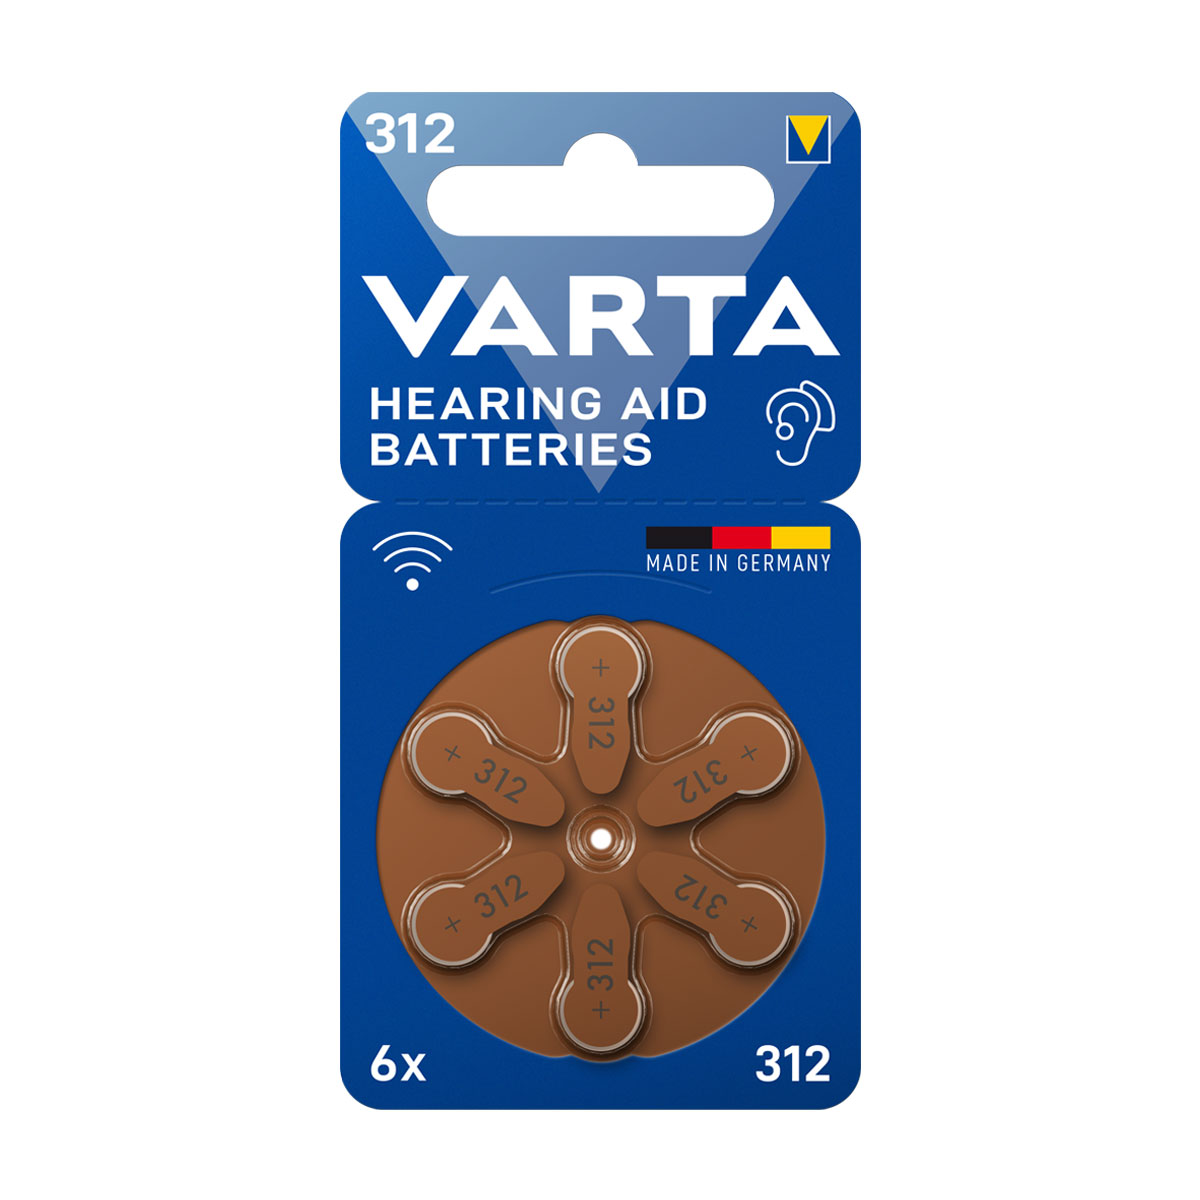 VARTA Hearing Aid Batteries 312 Hörgeräte Batterie (6er Blister)